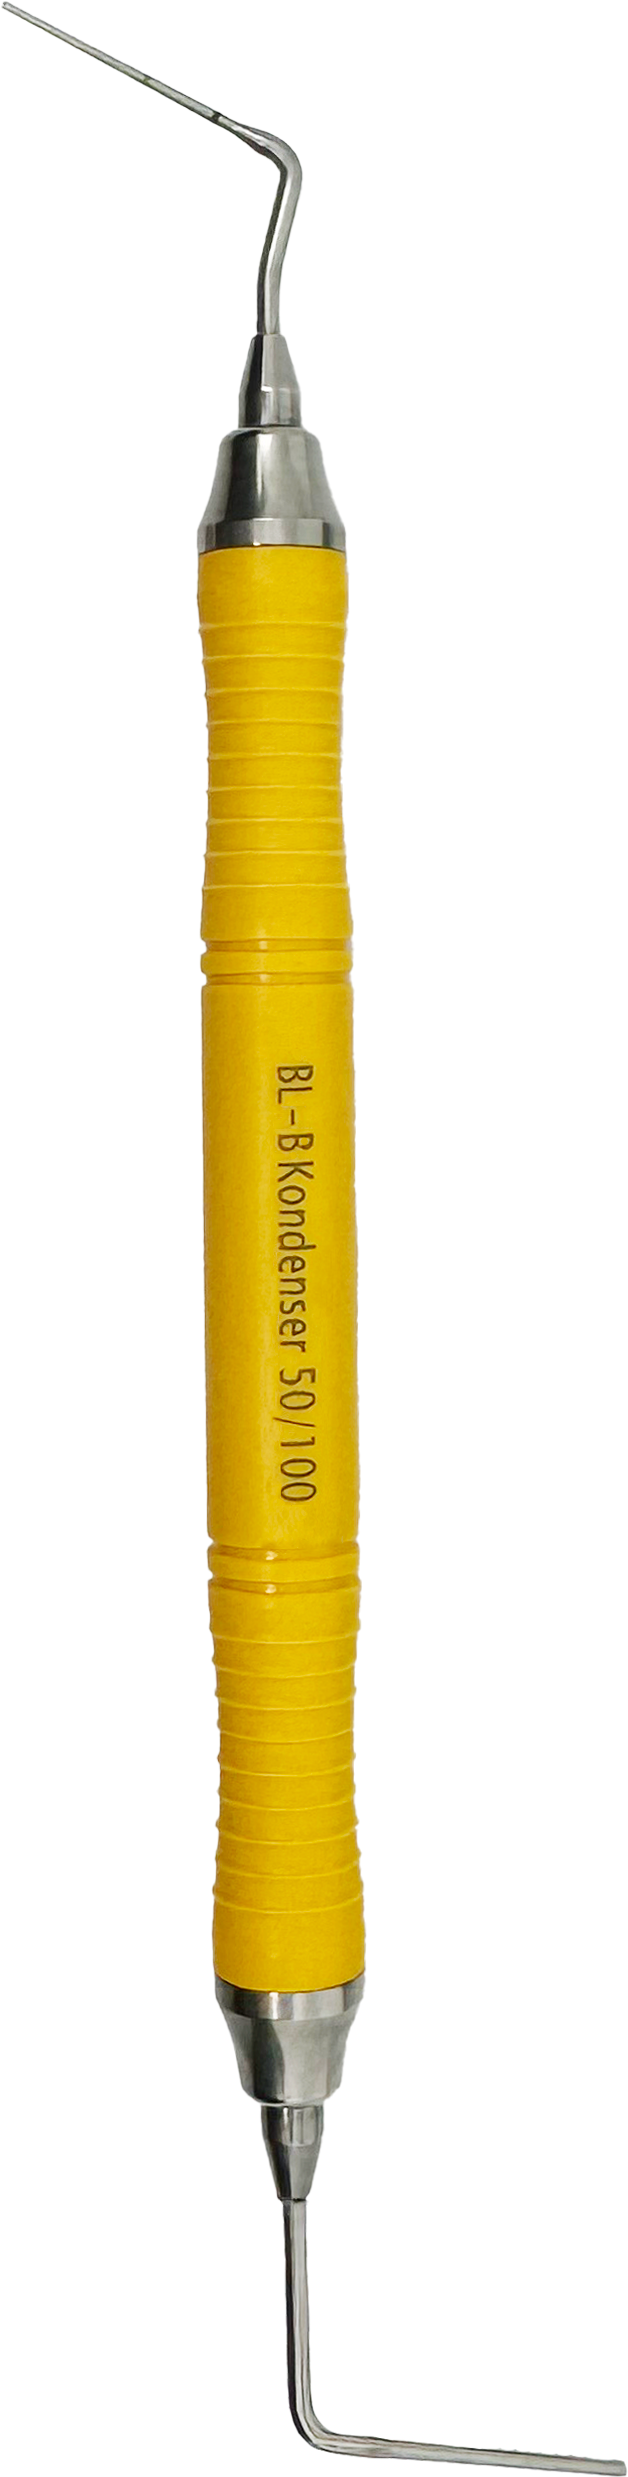 BL-B Kondenser 50/100 (Retail)